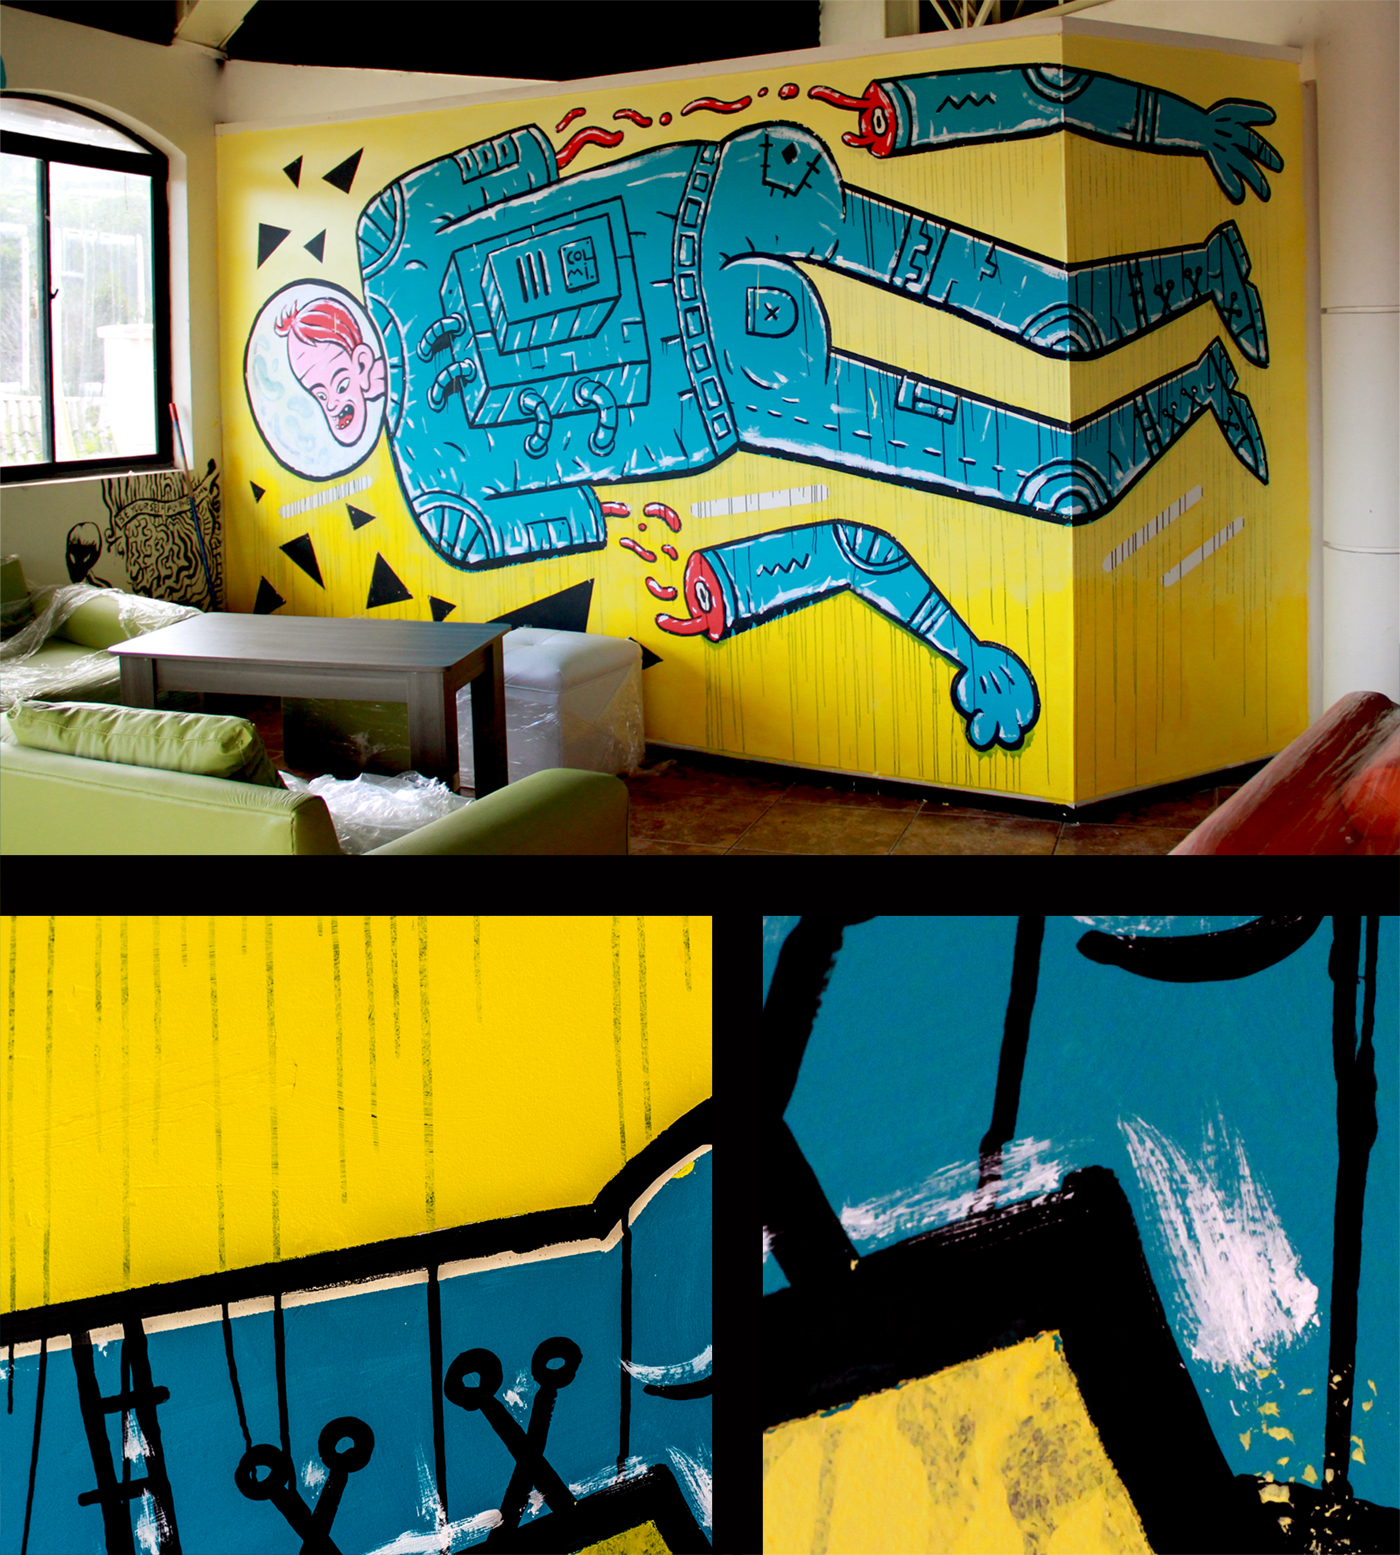 kosmos cosmos colmillo colmillodibuja Mural walls ILLUSTRATION  yellow Hi fi red